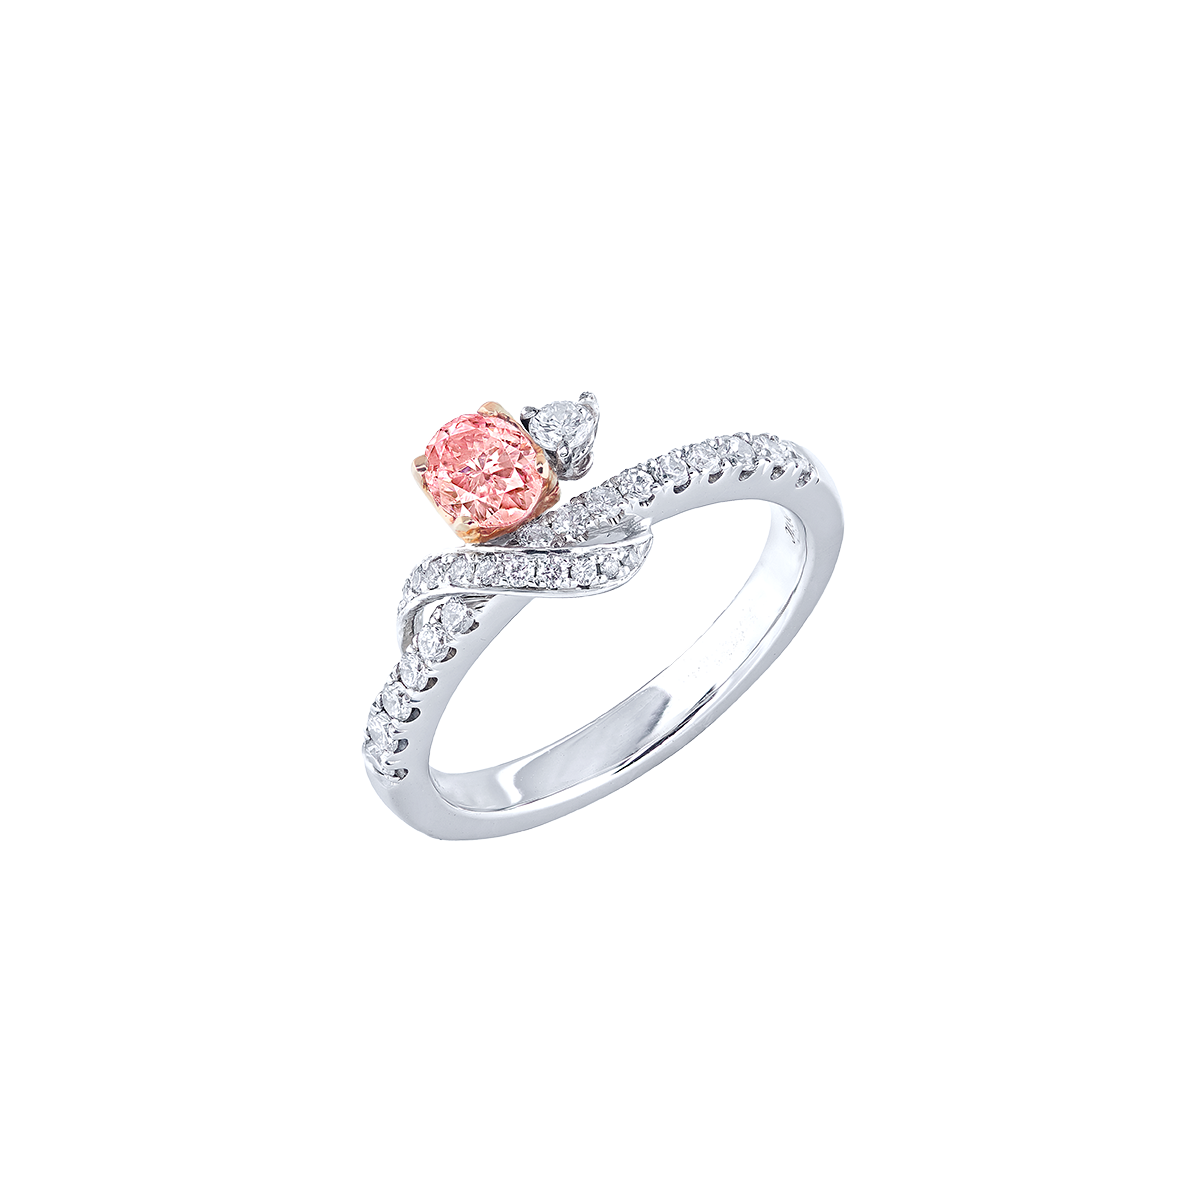 0.26 克拉 阿蓋爾粉鑽鑽戒
Pink Diamond from Argyle Mine 
and Diamond Ring